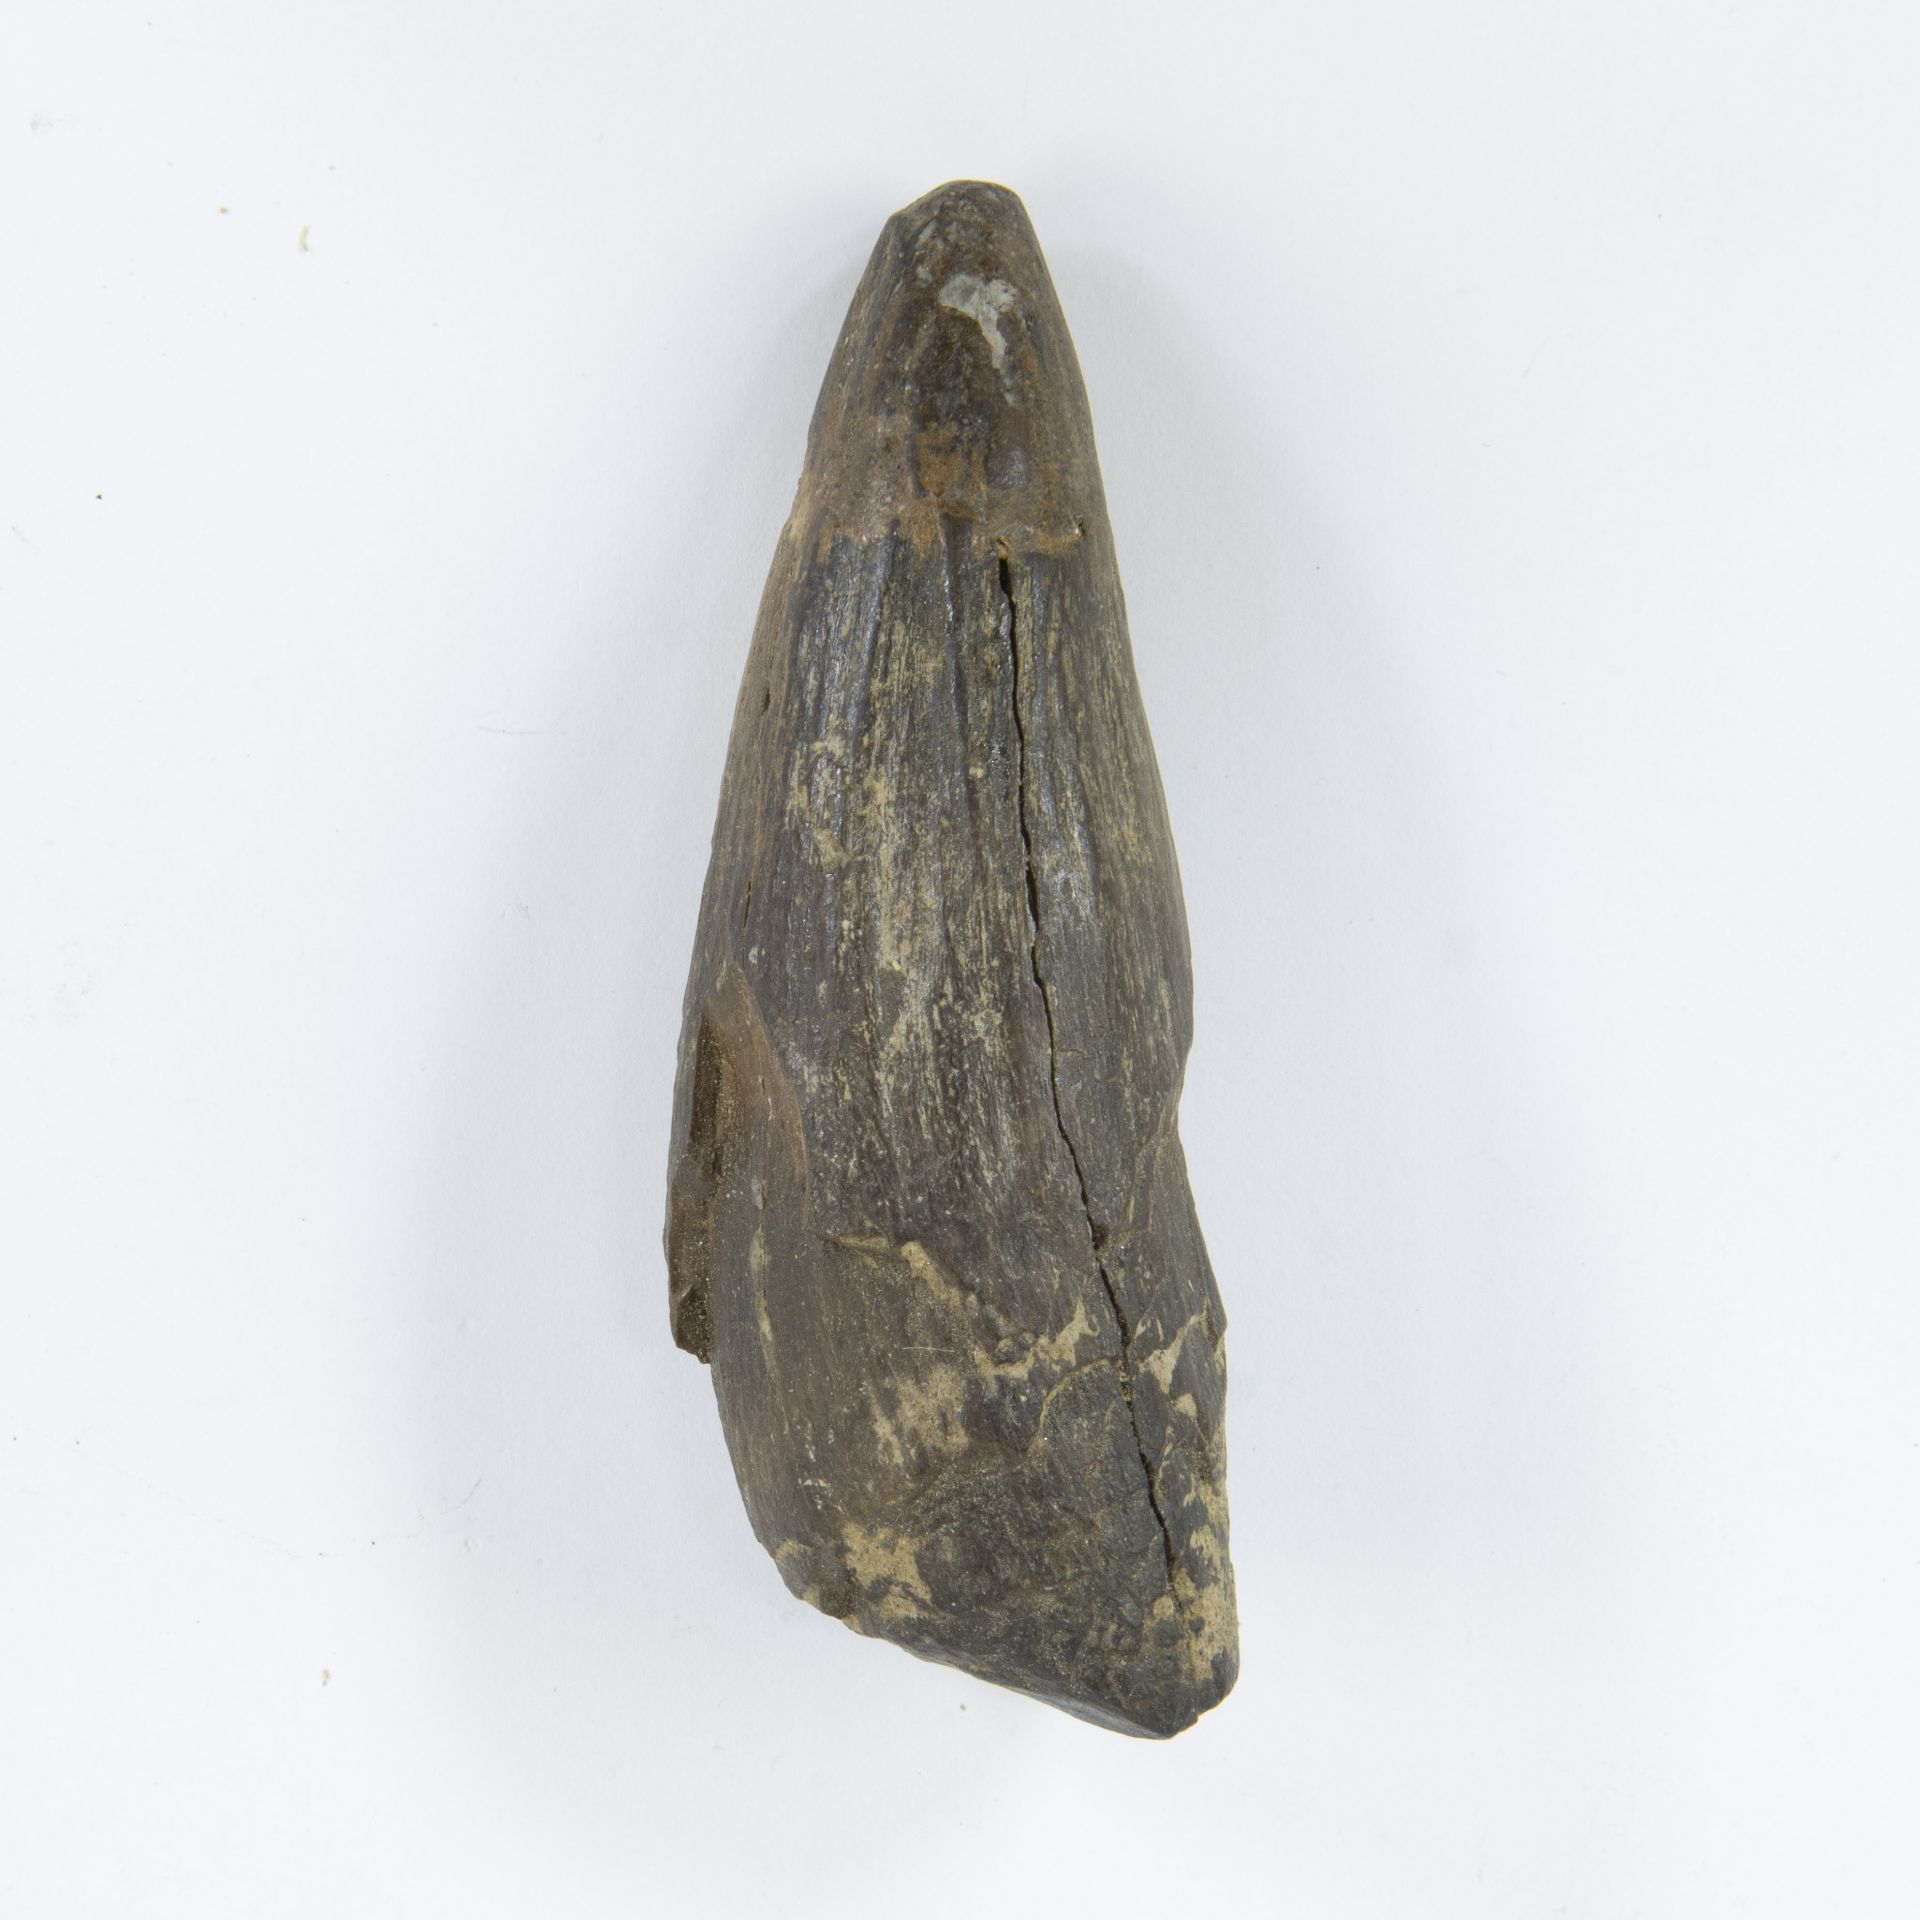 Sperm whale tooth, Miocene, (Kieldrecht - Kallo)